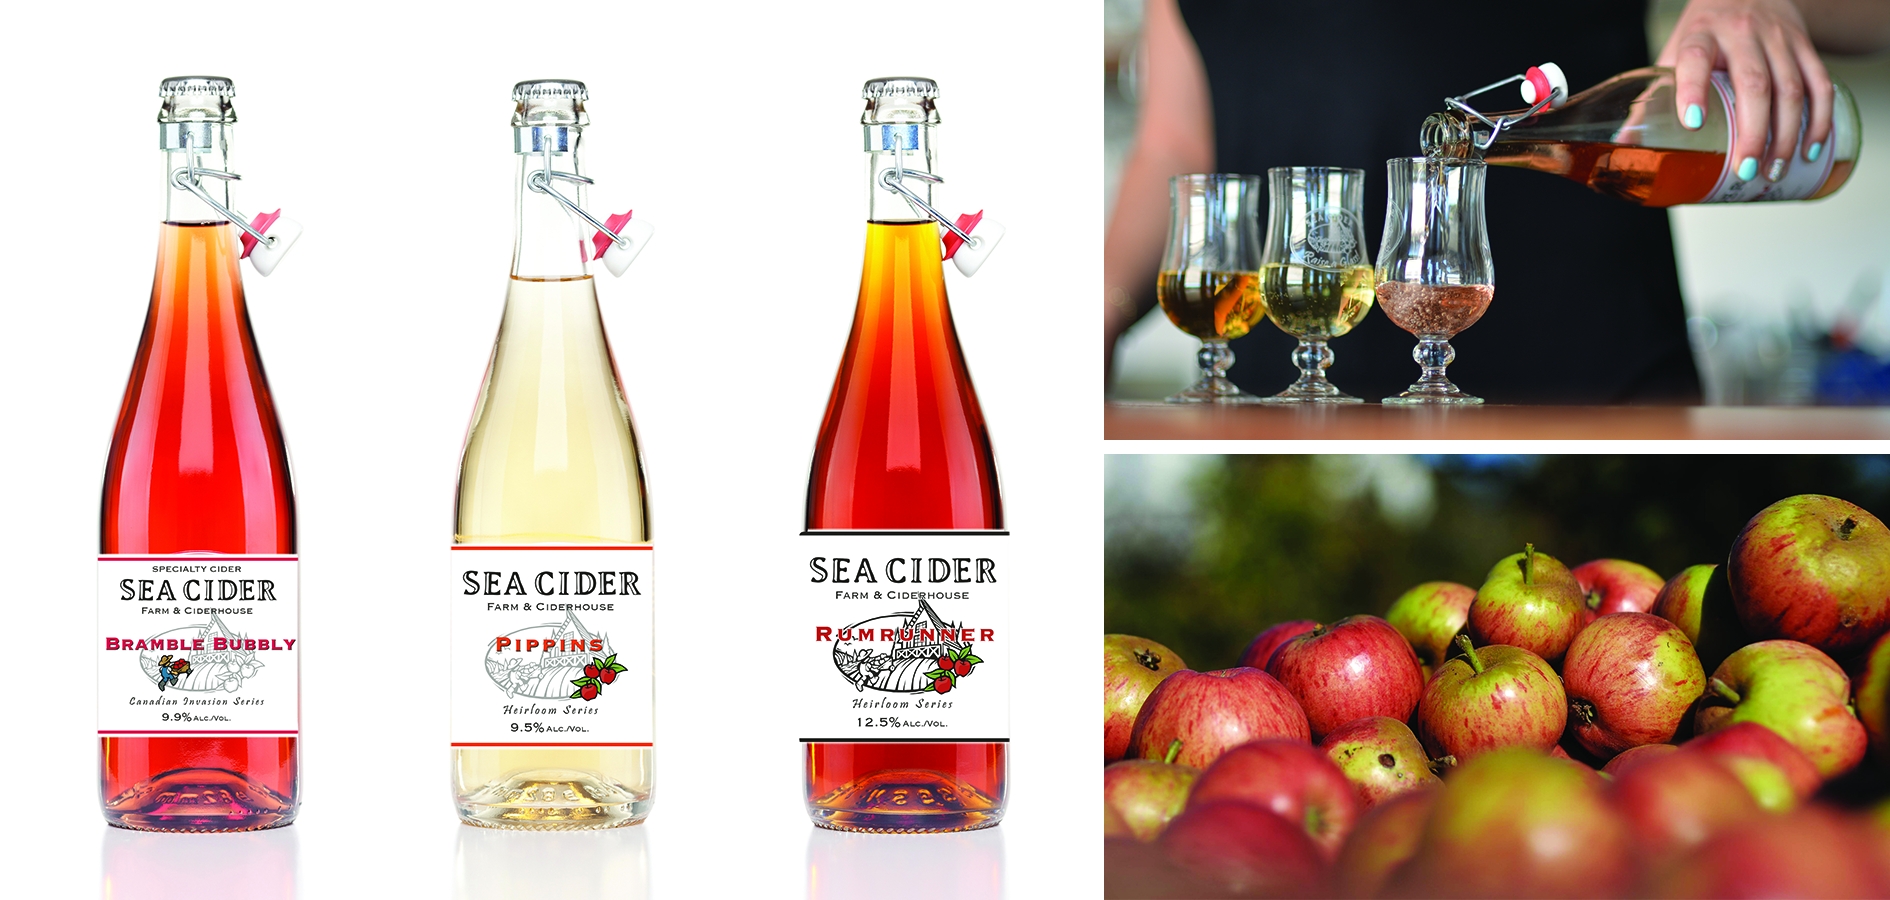 Sea Cider Farm and Ciderhouse image 2017